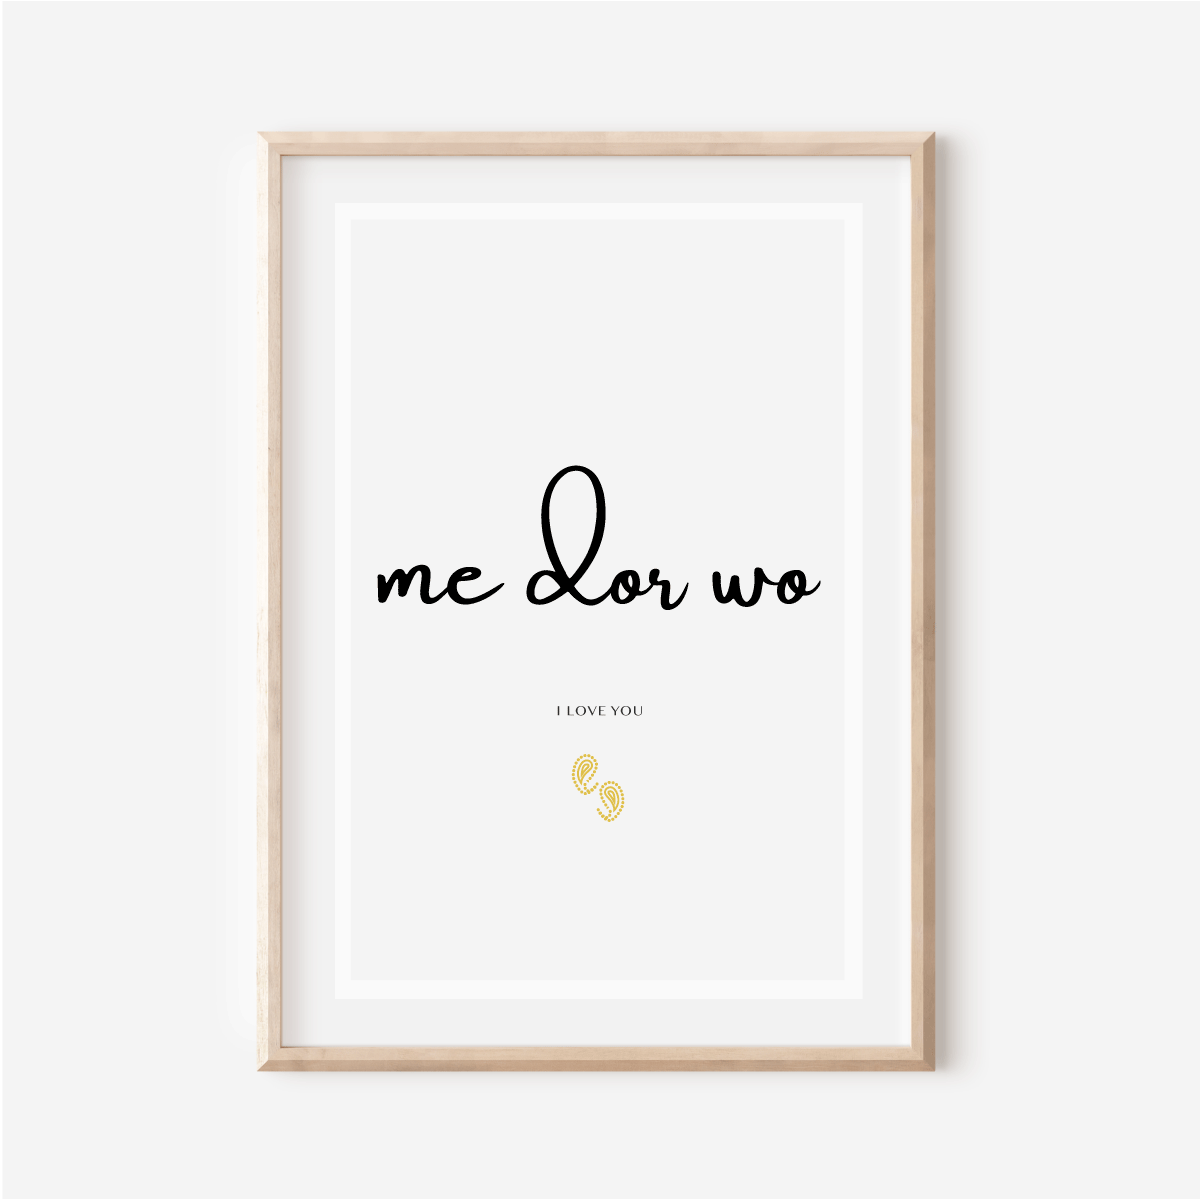 I love you in Twi - "Me dor wo" - 30x40 print